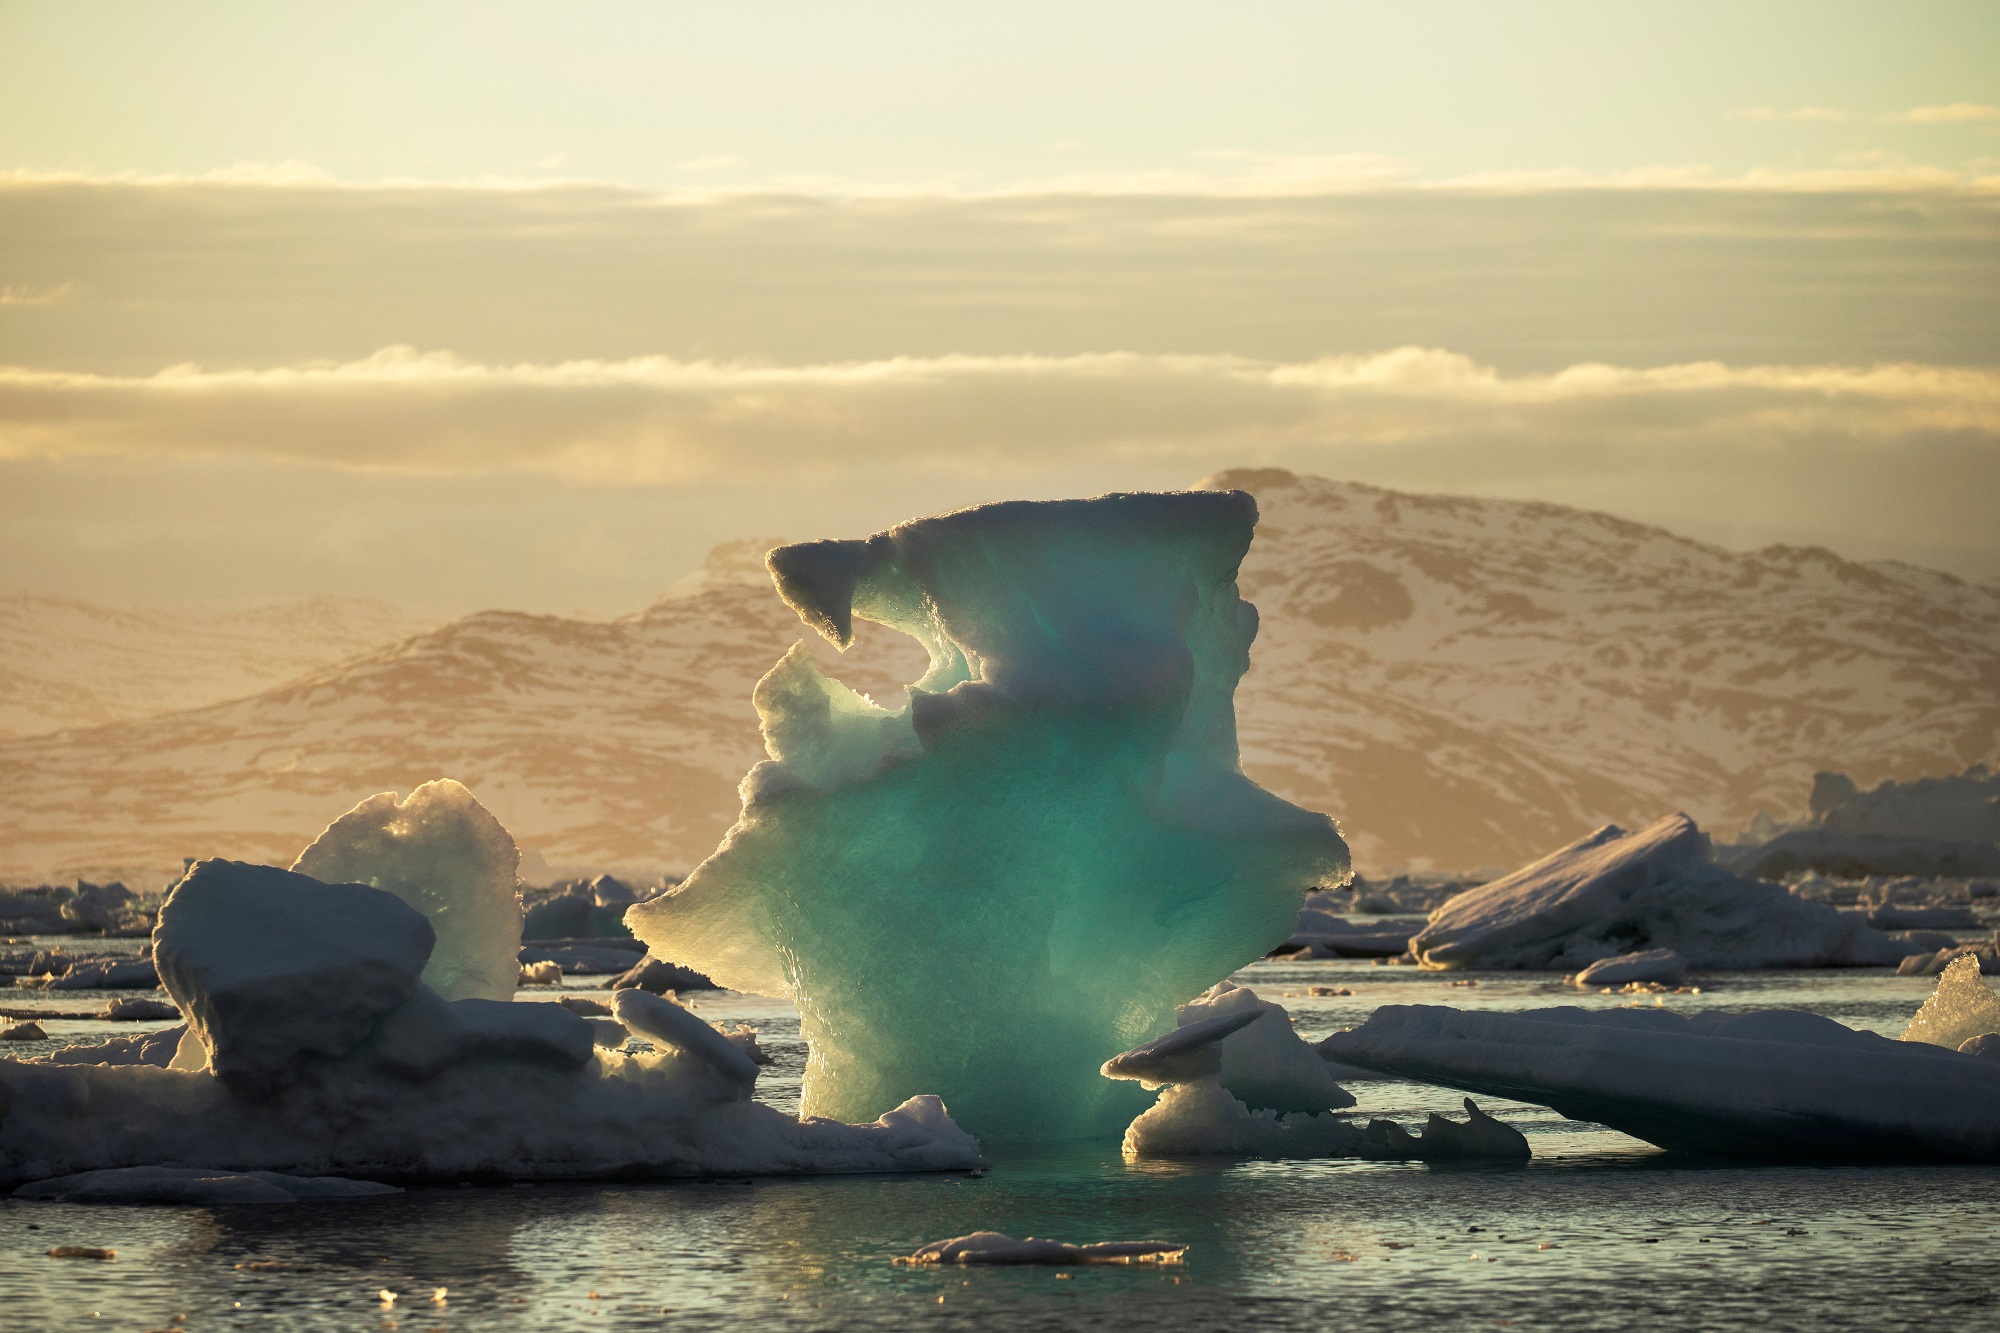 جبل جليدي يطفو في مضيق بحري بالقرب من تاسيلاق في غرينلاند. 16 حزيران/ يونيو 2018. لوكاس جاكسون/ رويترز